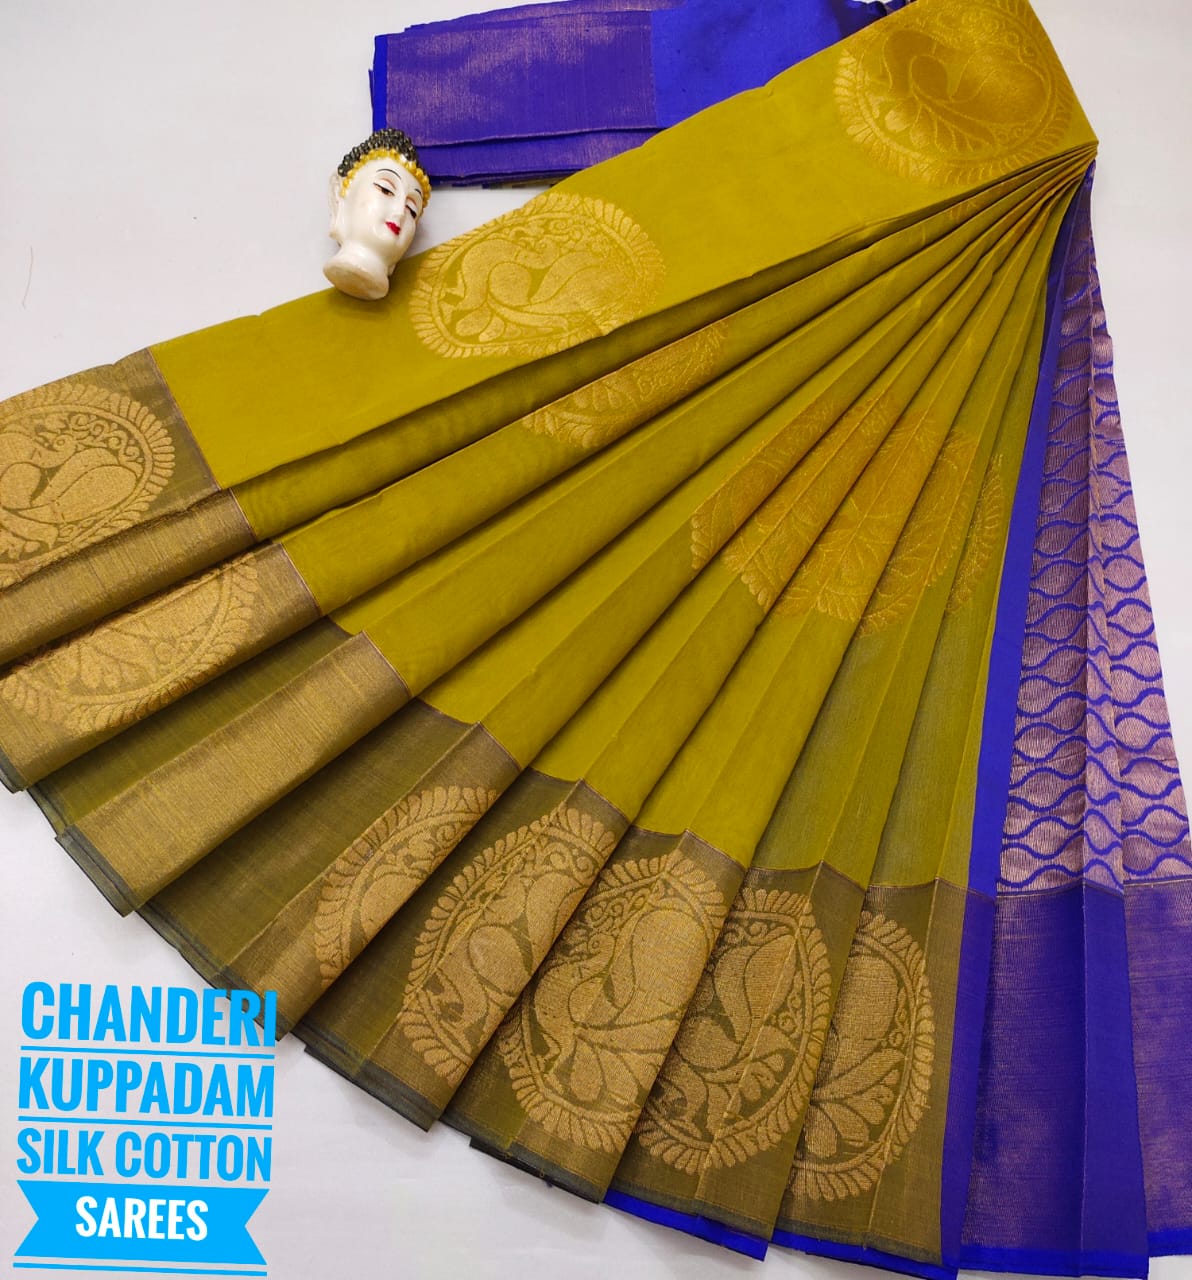 Chanderi Kuppadam Silk Cotton Saree – Chickpet Sarees